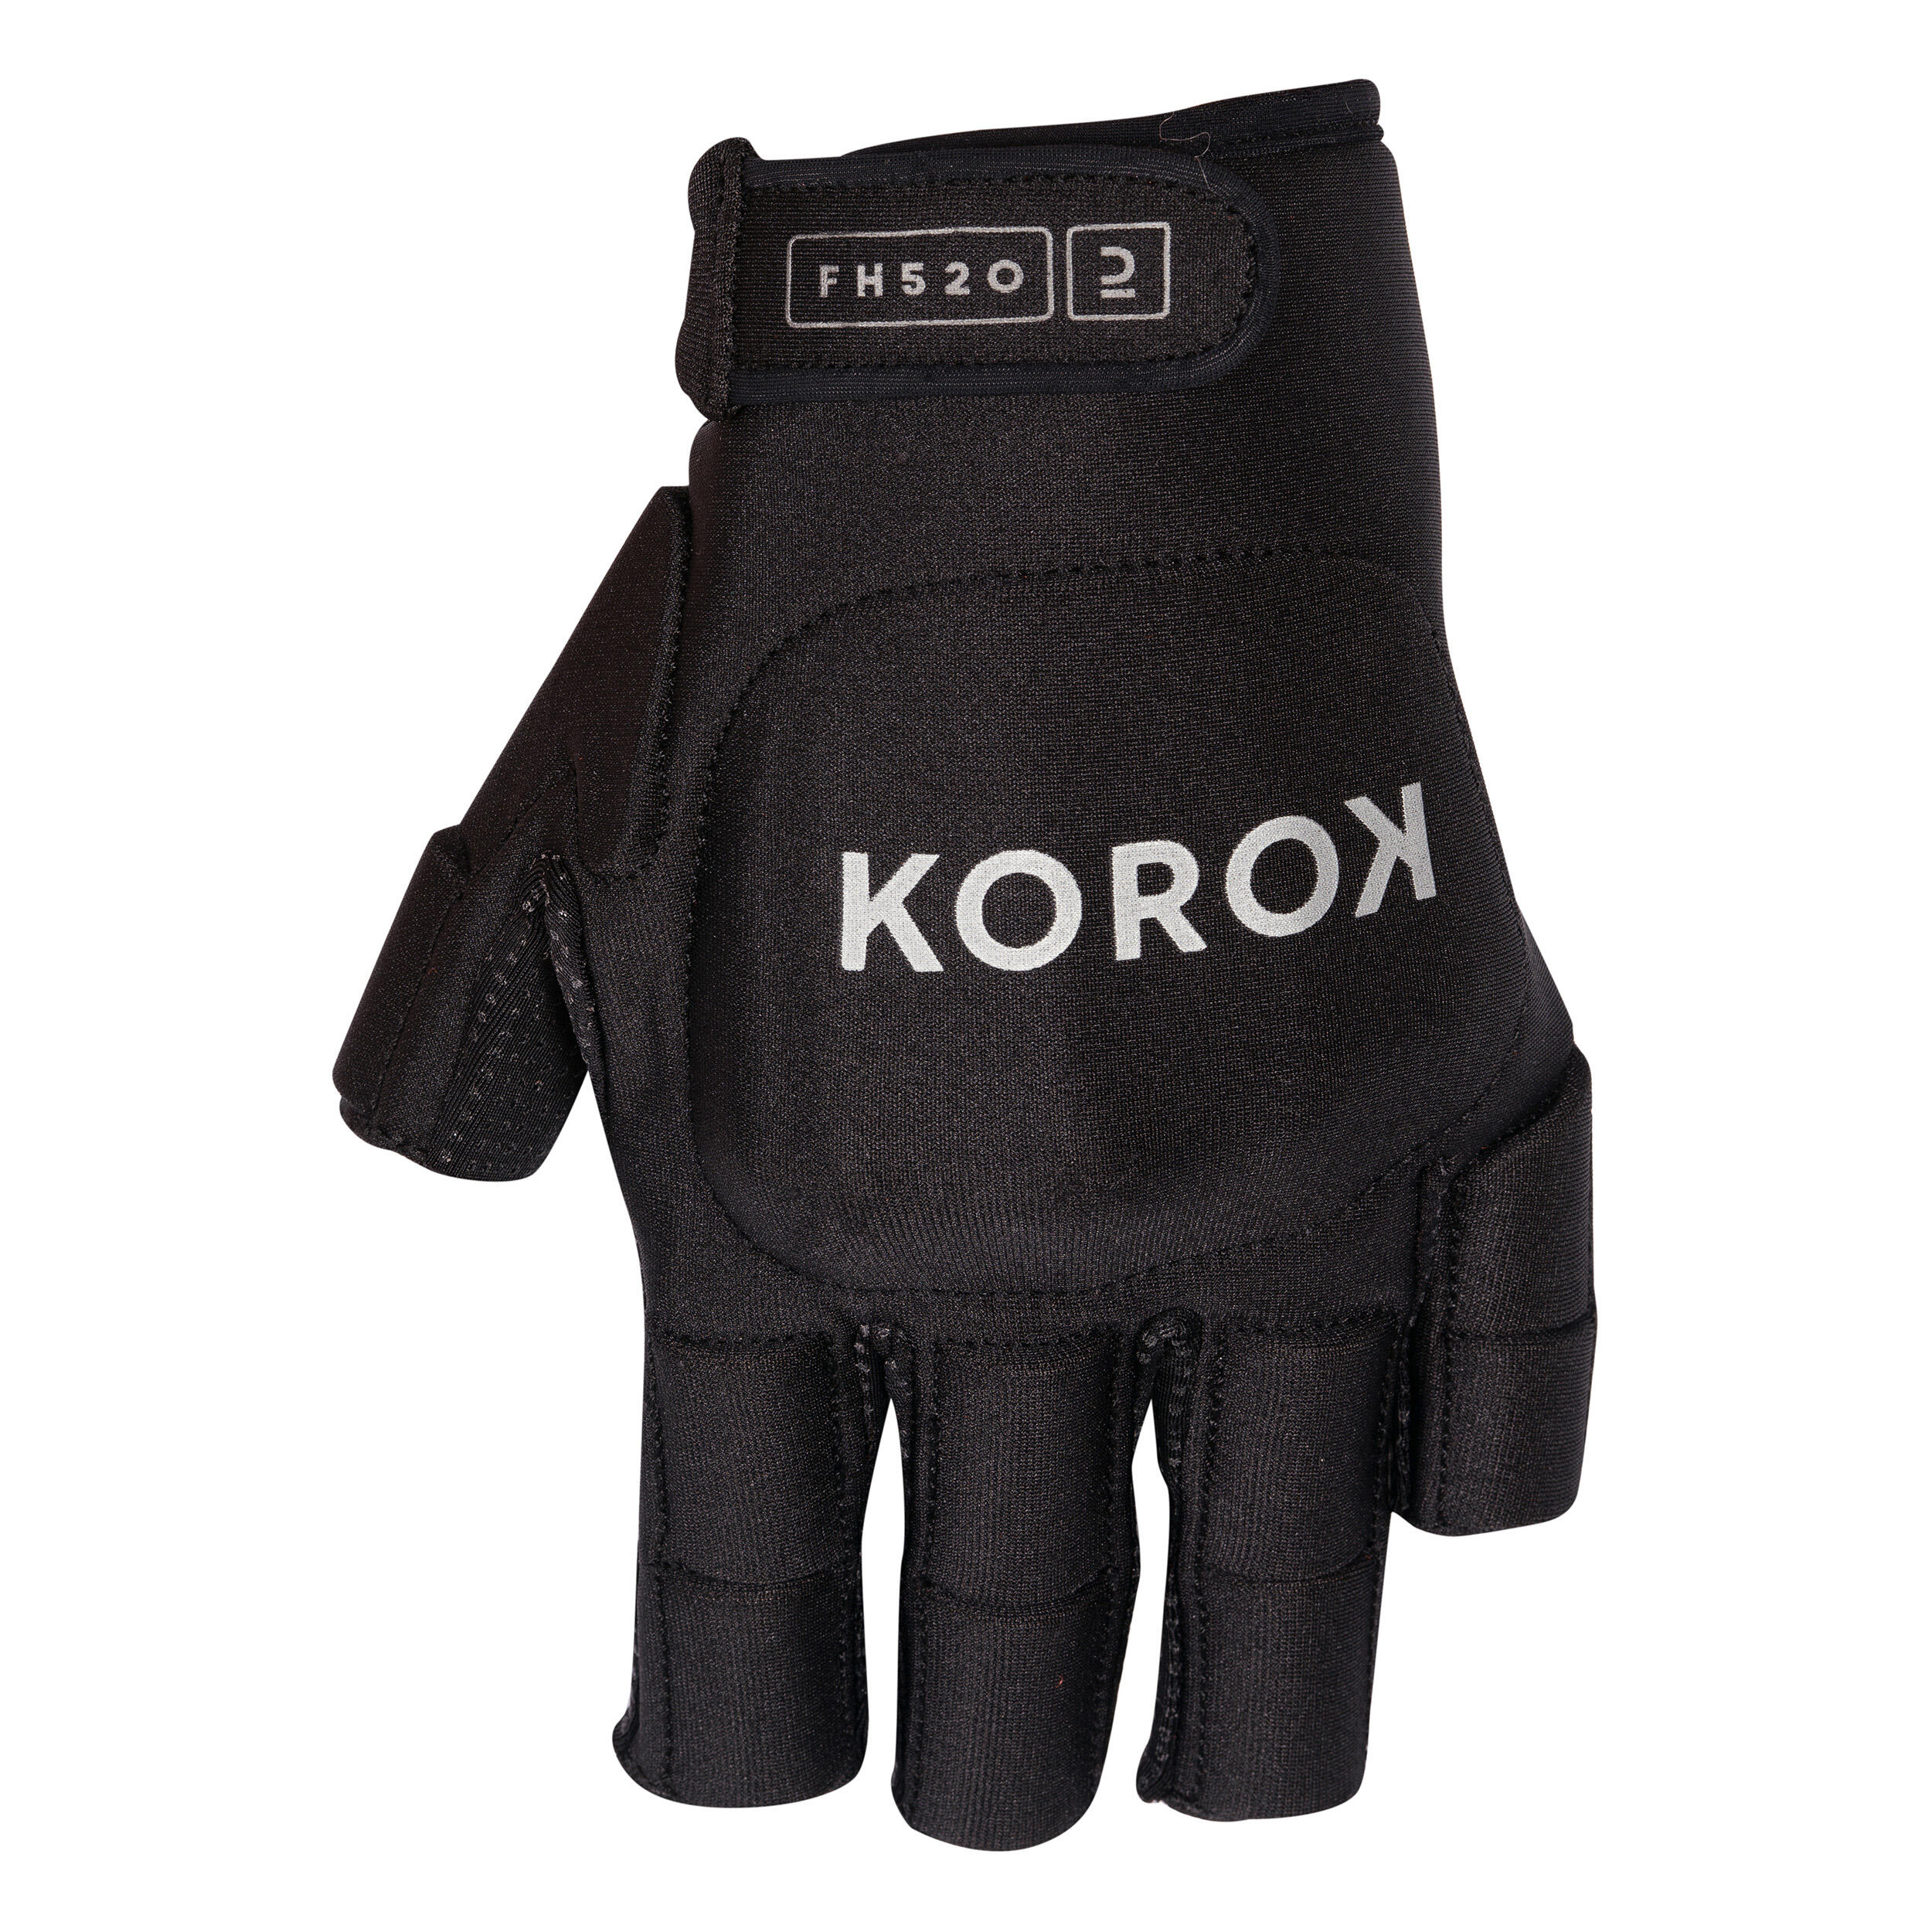 Kids'/Adult Mid/High Intensity 2 Knuckle Field Hockey Glove FH520 - Black/Grey 1/6